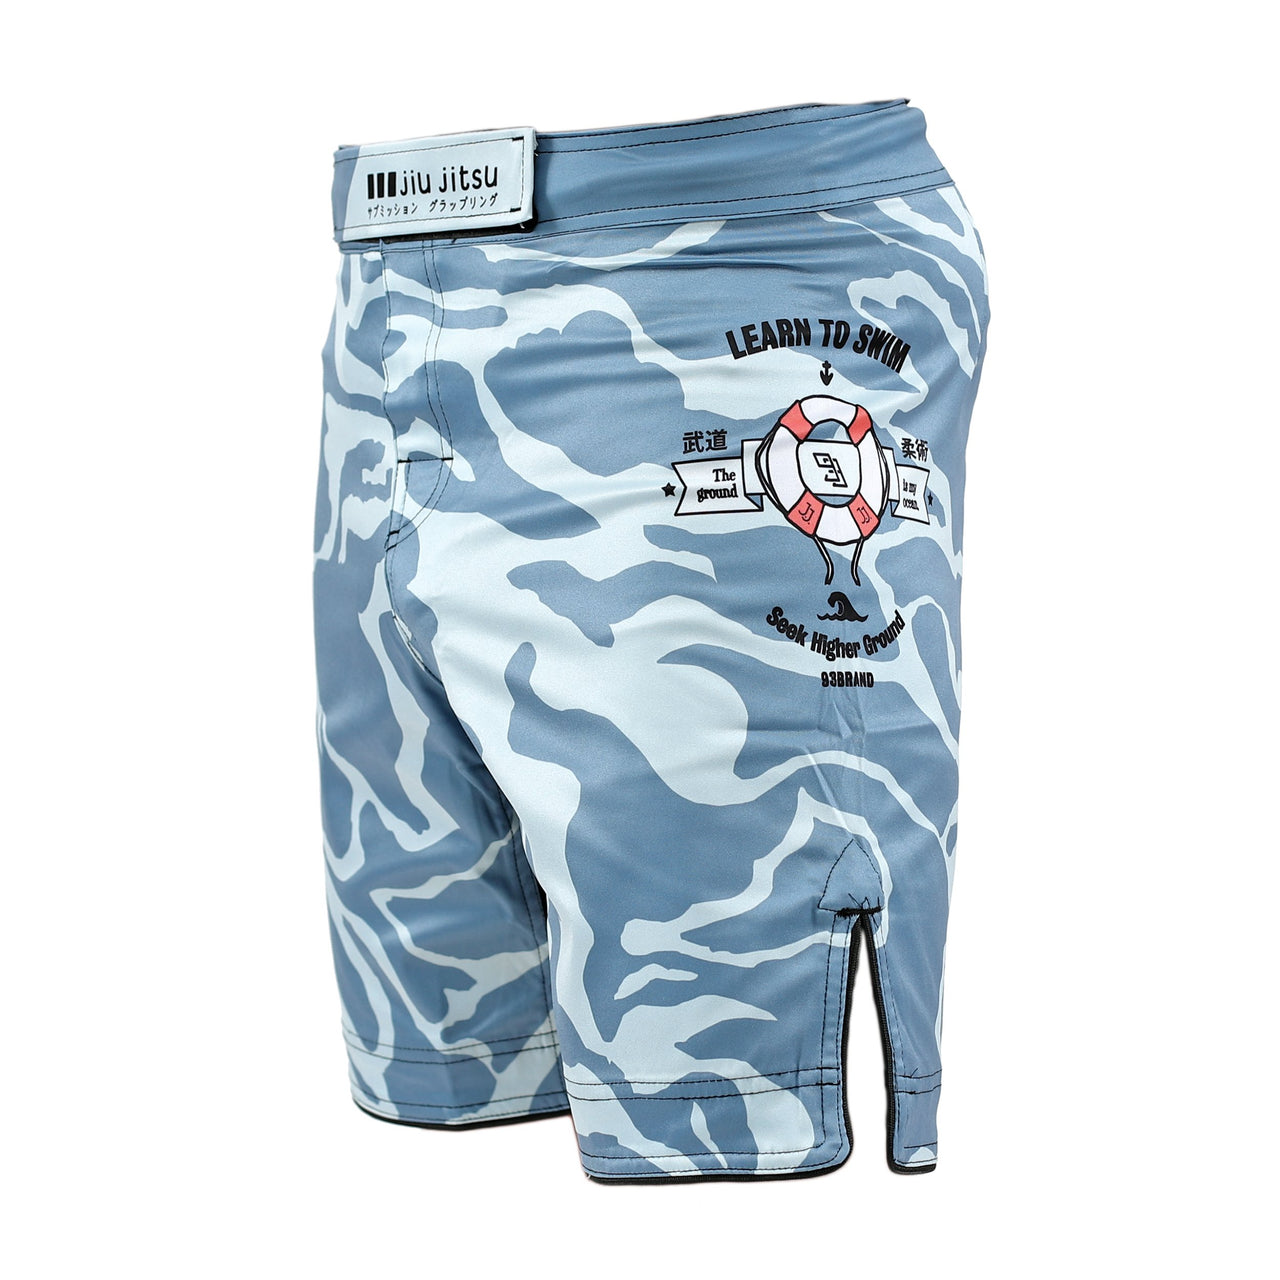 93brand "Water" Shorts (Regular Length)